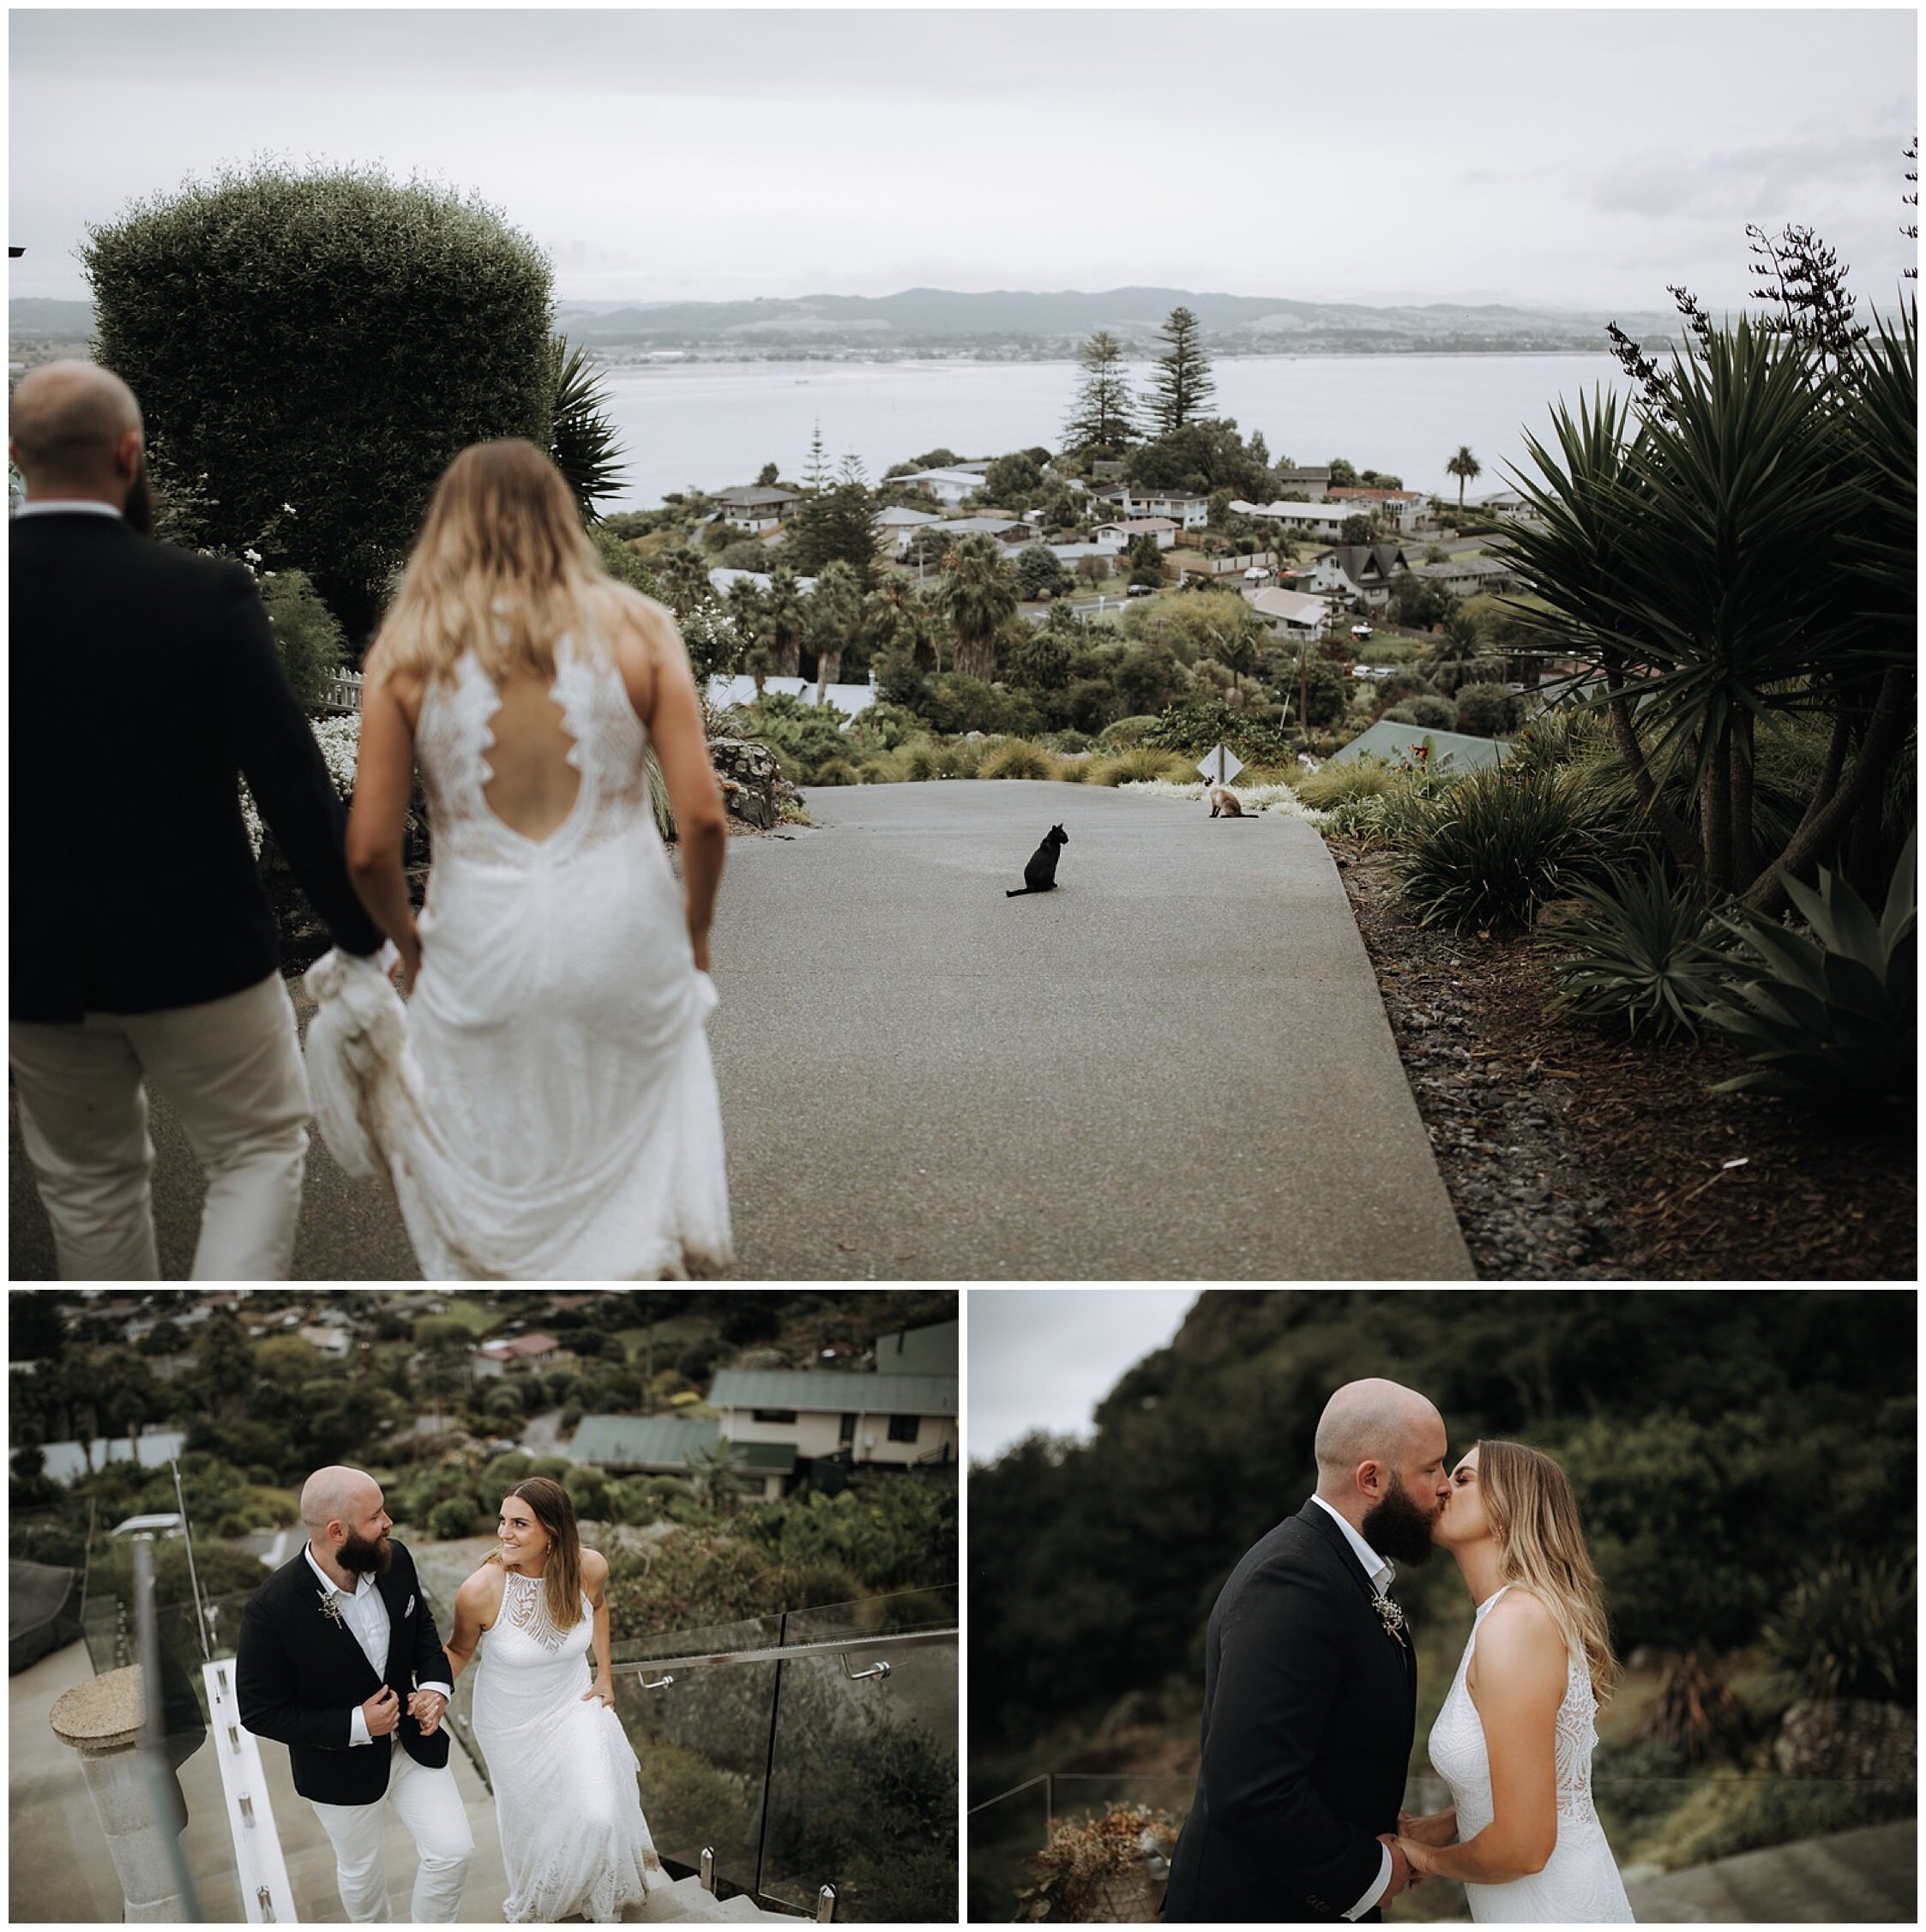 Zanda+Auckland+wedding+photographer+dramatic+Whangarei+heads+vintage+touches+New+Zealand_49.jpeg